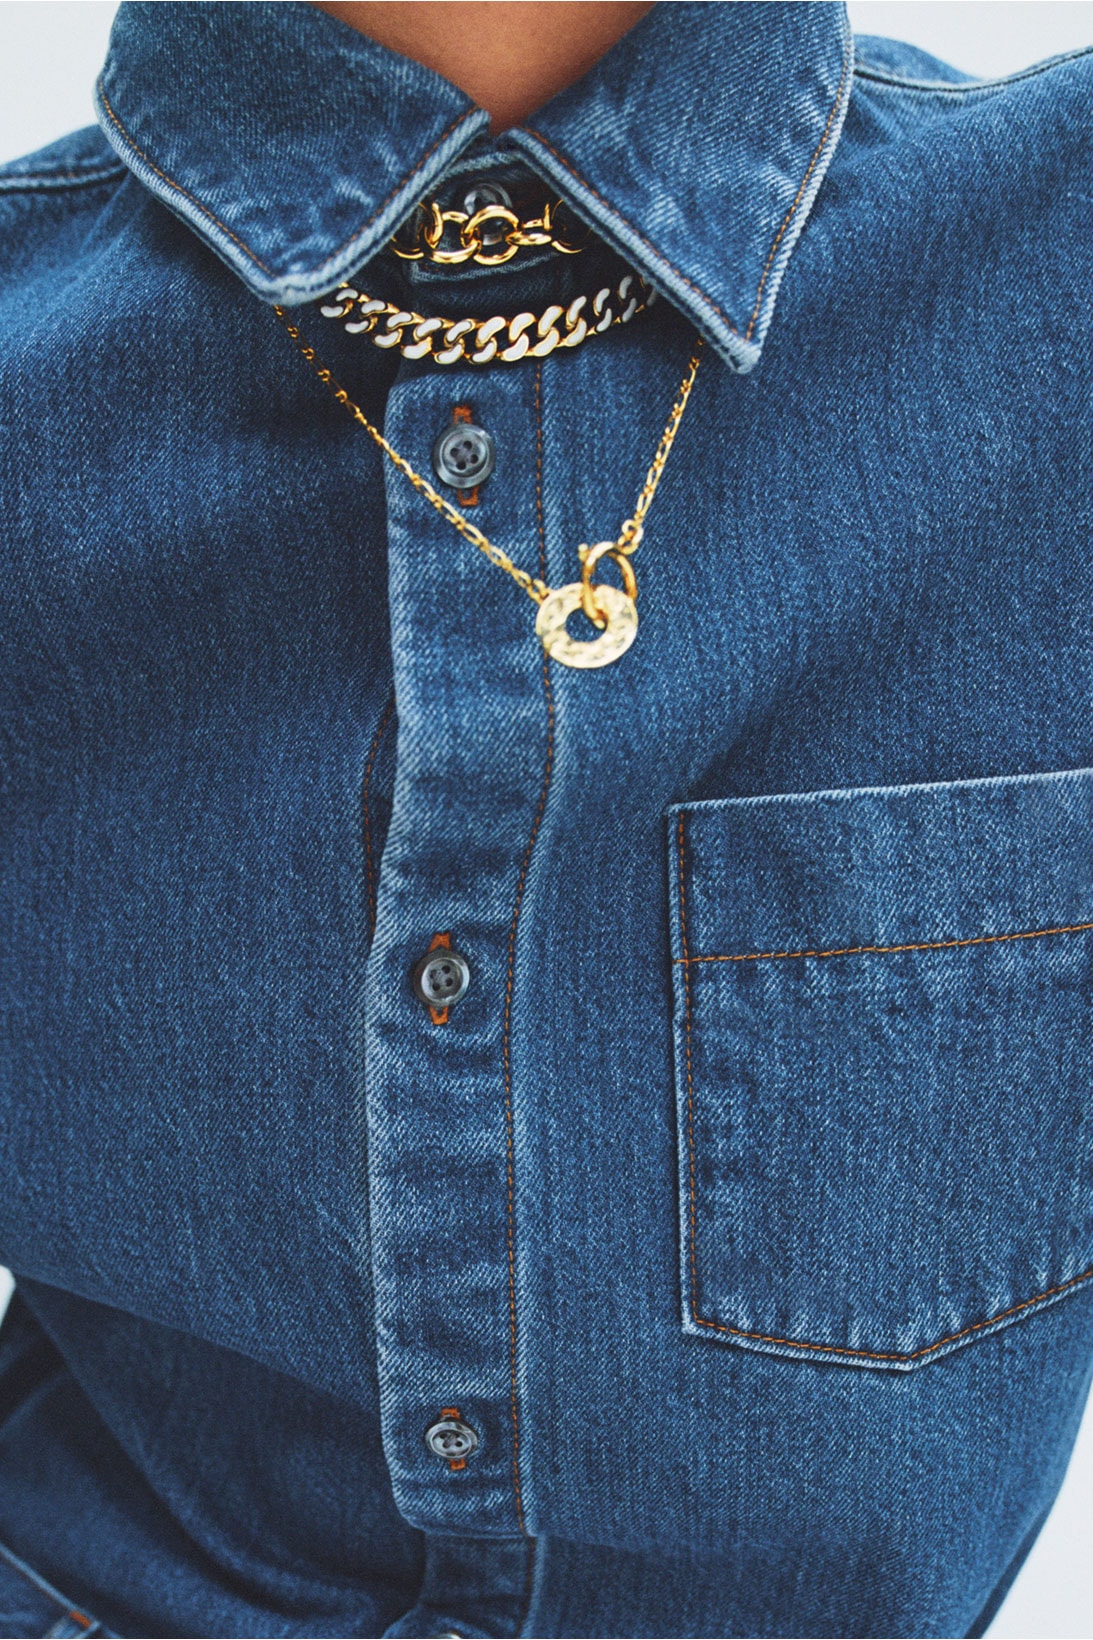 apc spring summer 2021 collection lookbook minimalist jeans denim shirts bags accessories